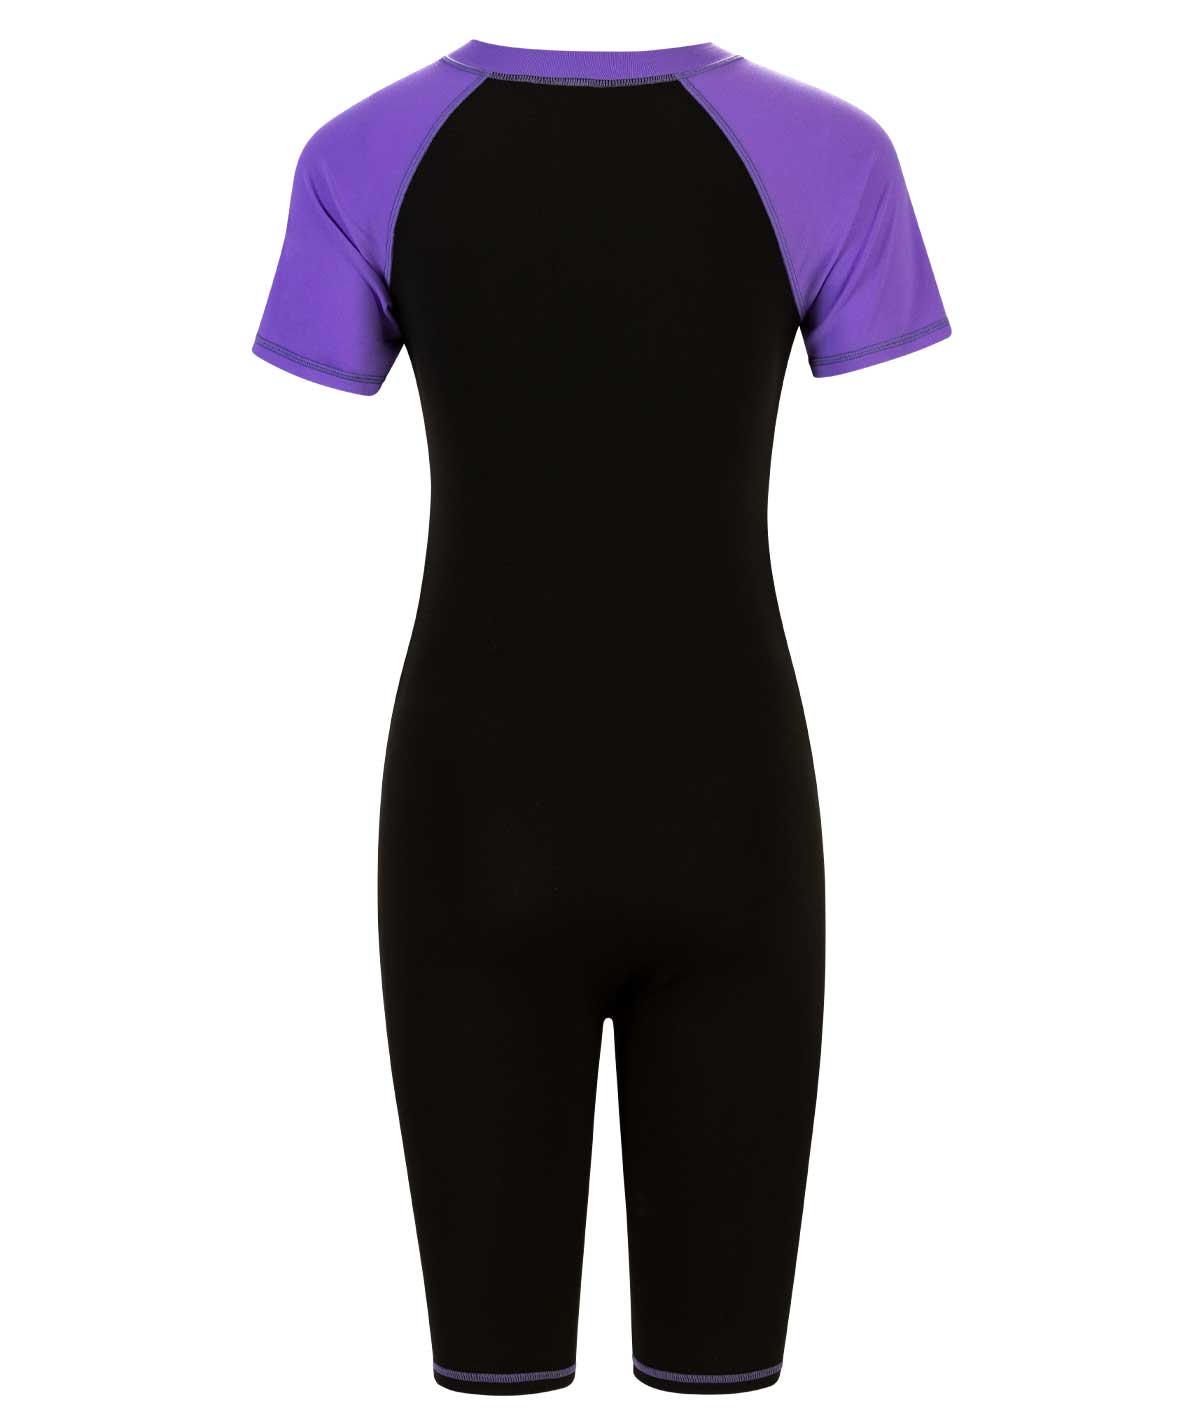 Aquashape Women's Black and Purple Color Blocked Mock Neck Zip-Front Aquatard Swimsuit